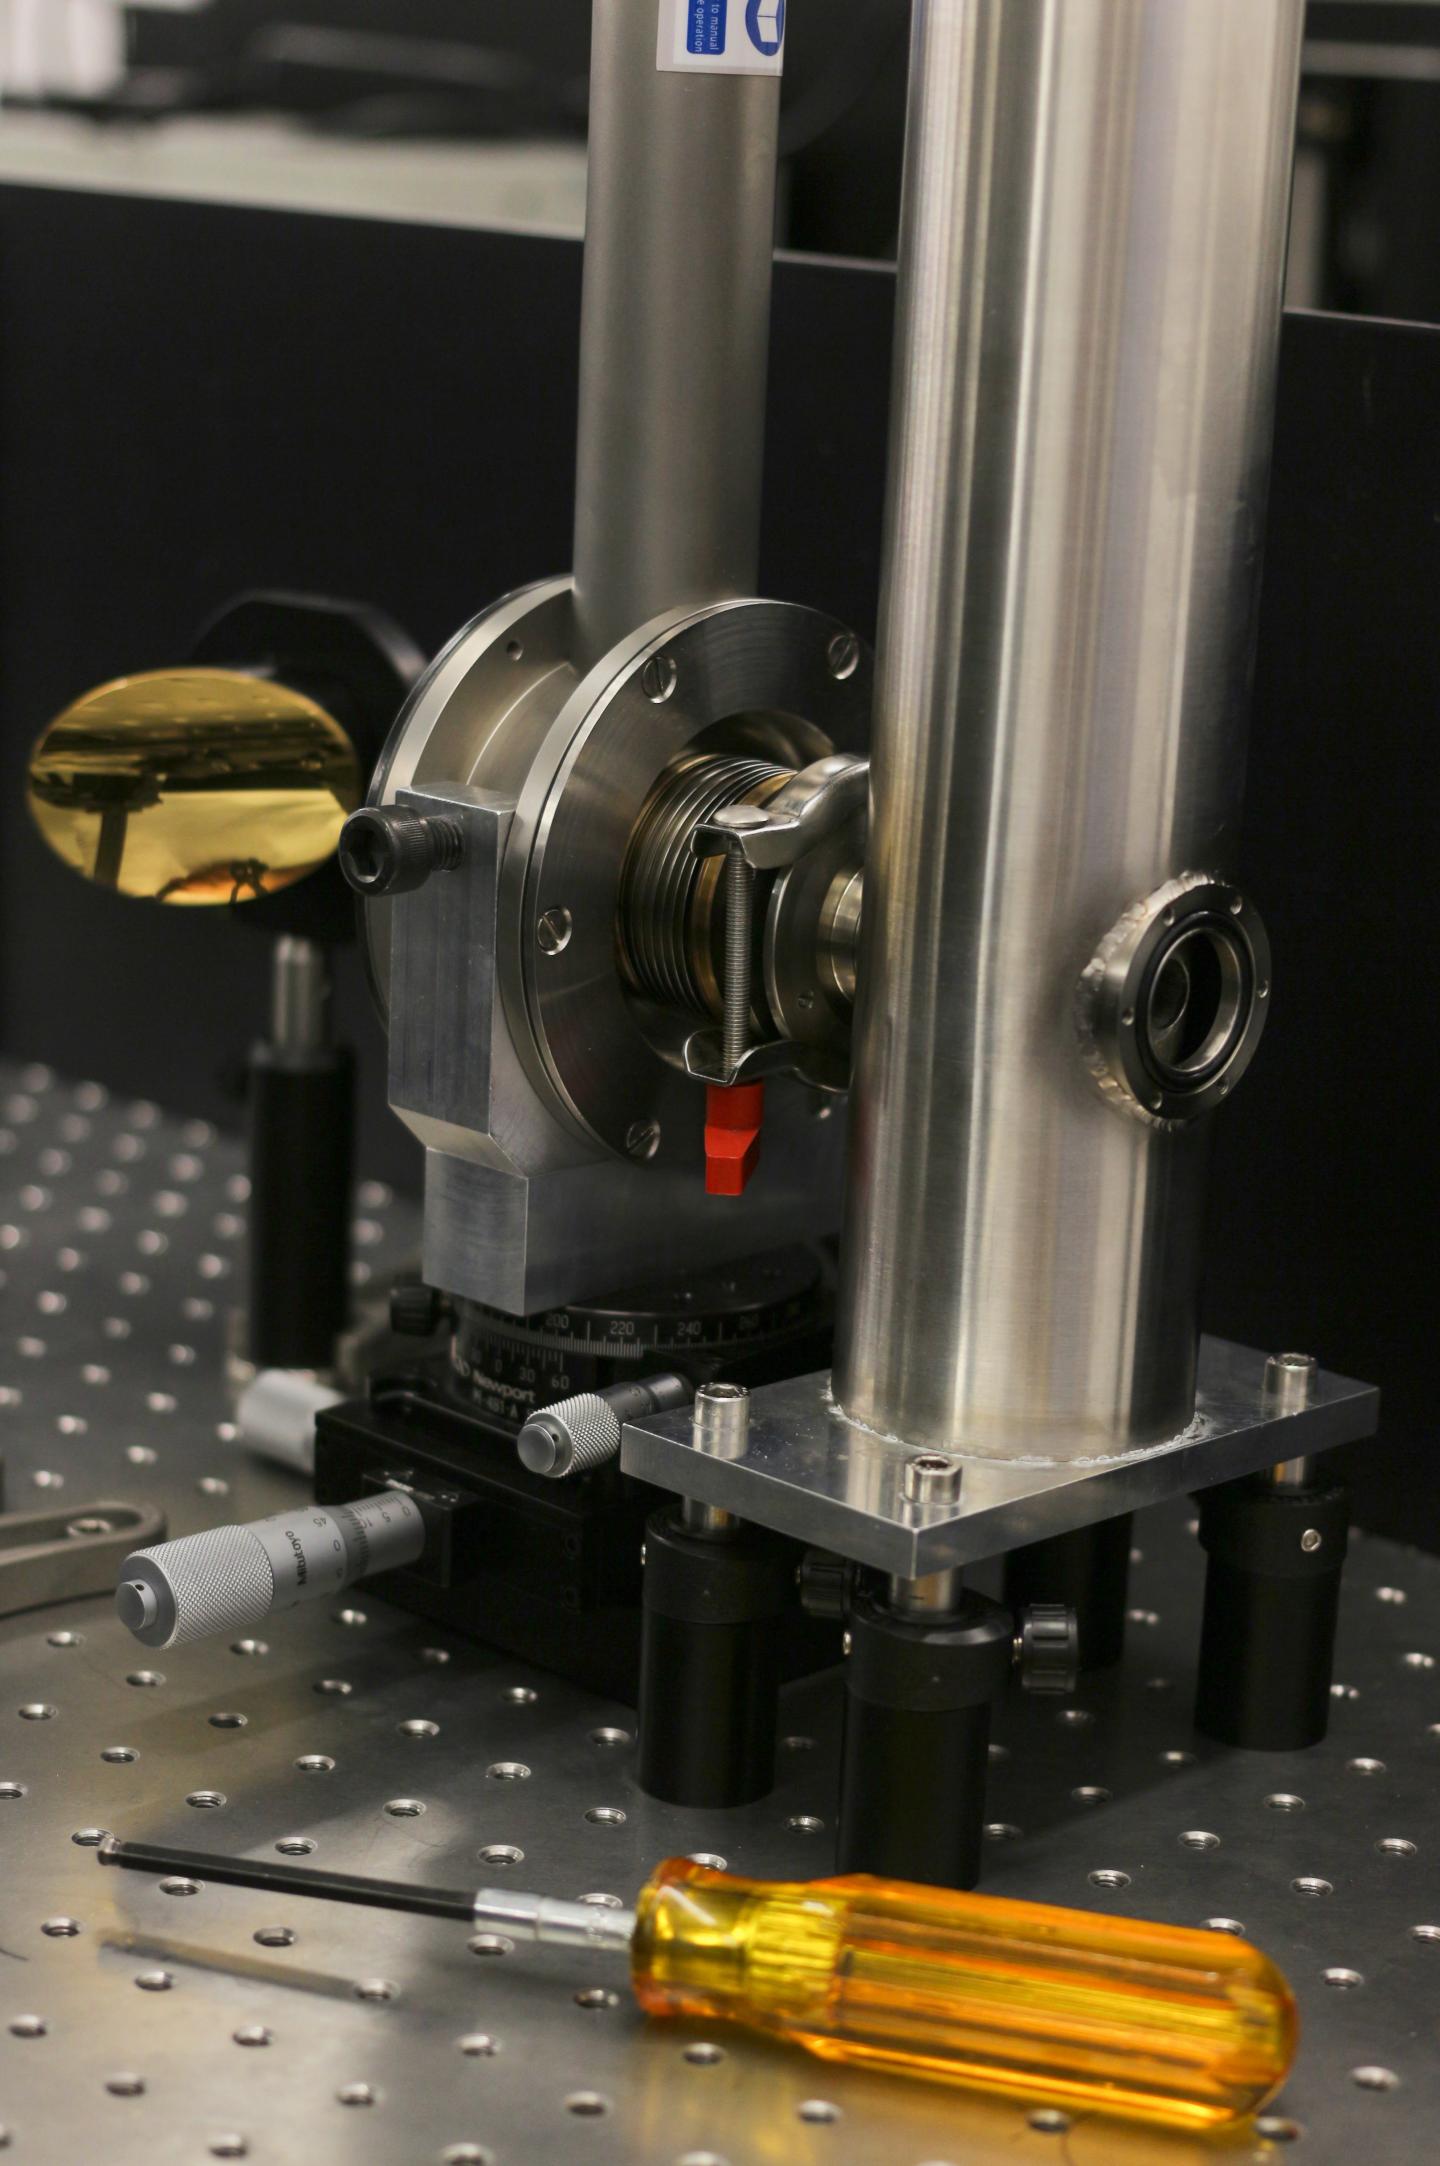 Tabletop Terahertz CR Spectrometer